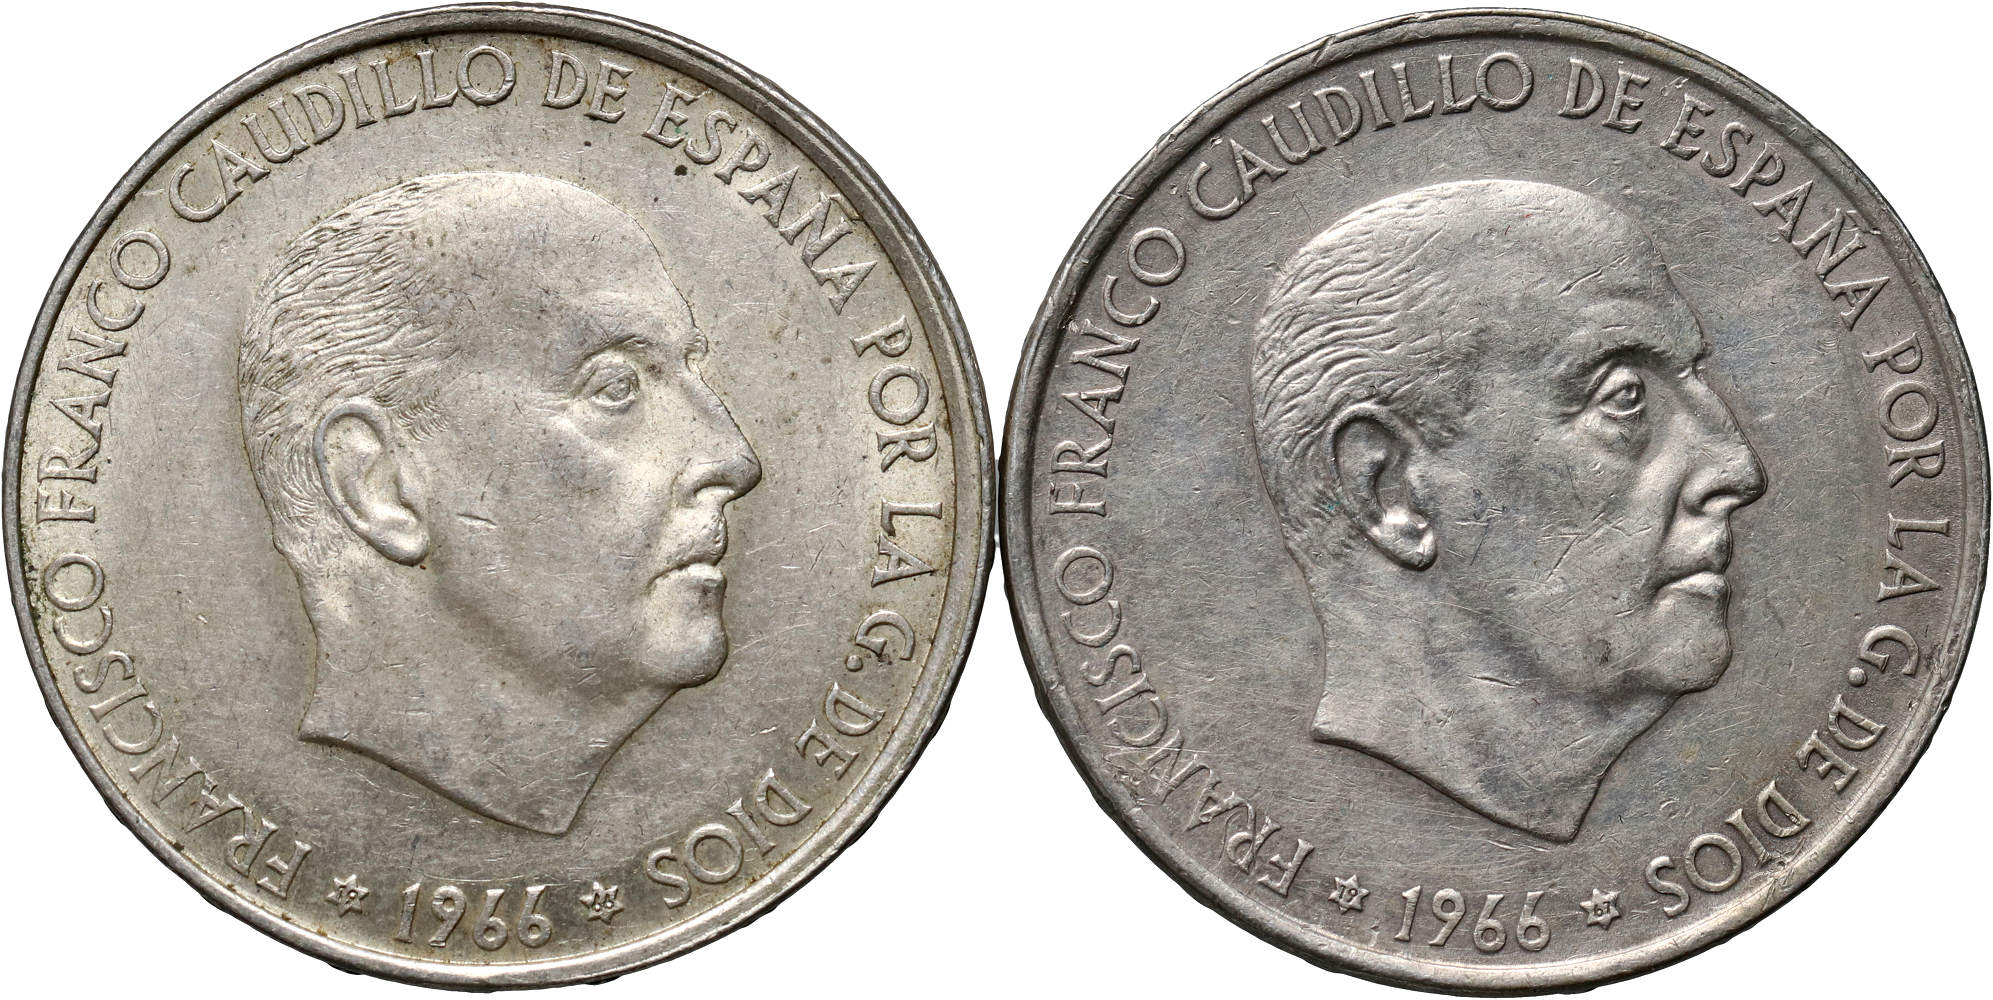 221. Hiszpania, 2 x 100 peset 1966, Francisco Franco